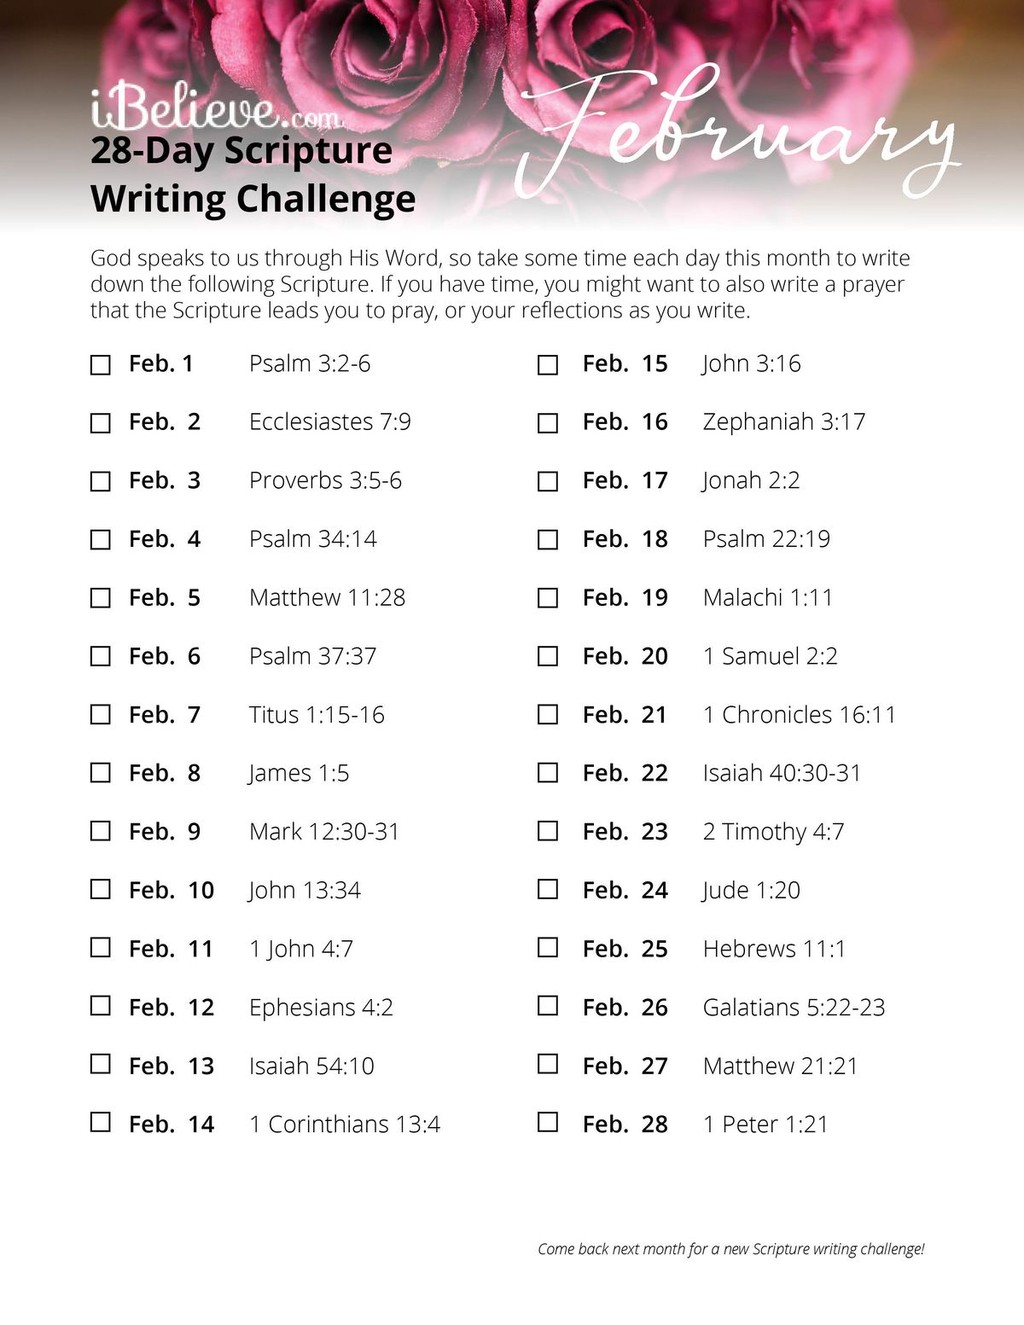 February Scripture Writing Challenge